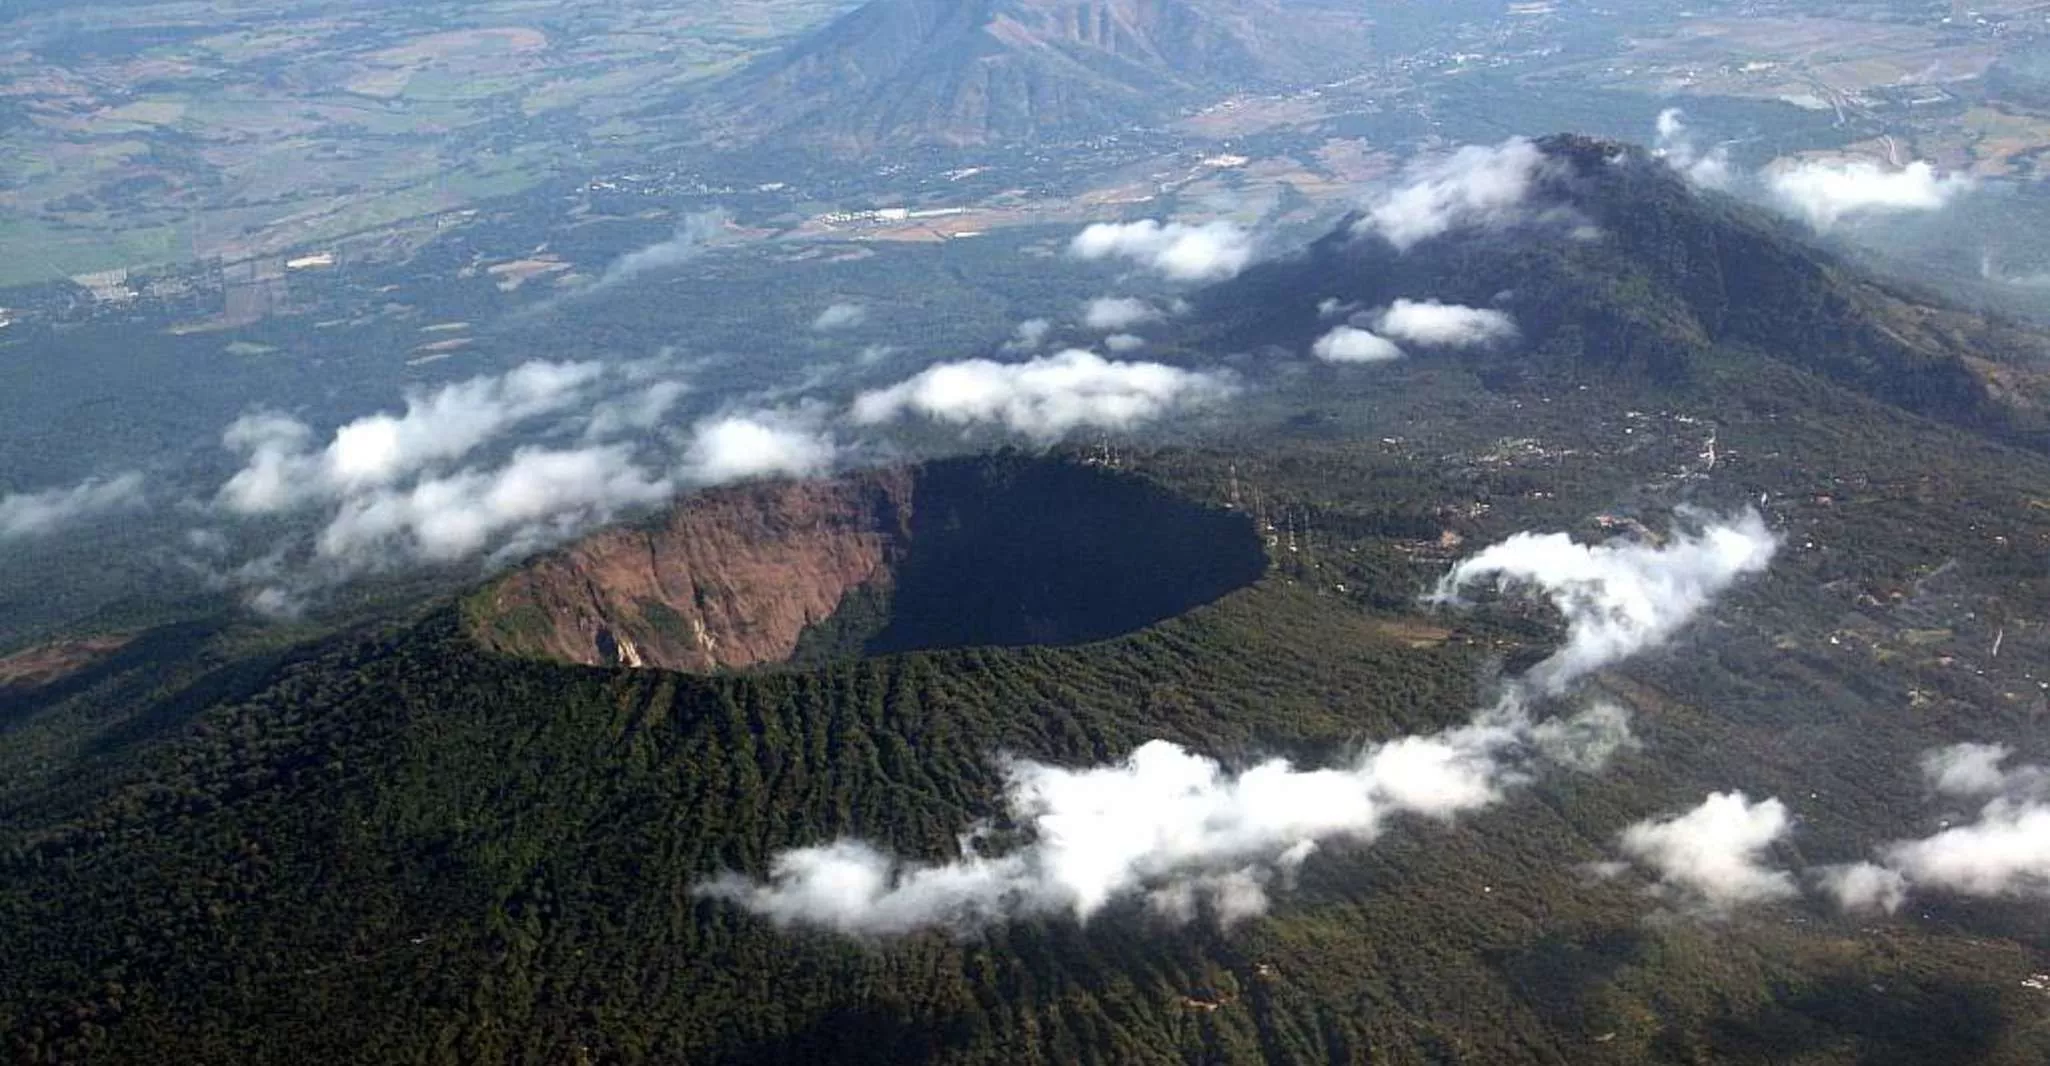 Volcan de Pachapupum in Peru, South America | Volcanos - Rated 0.8